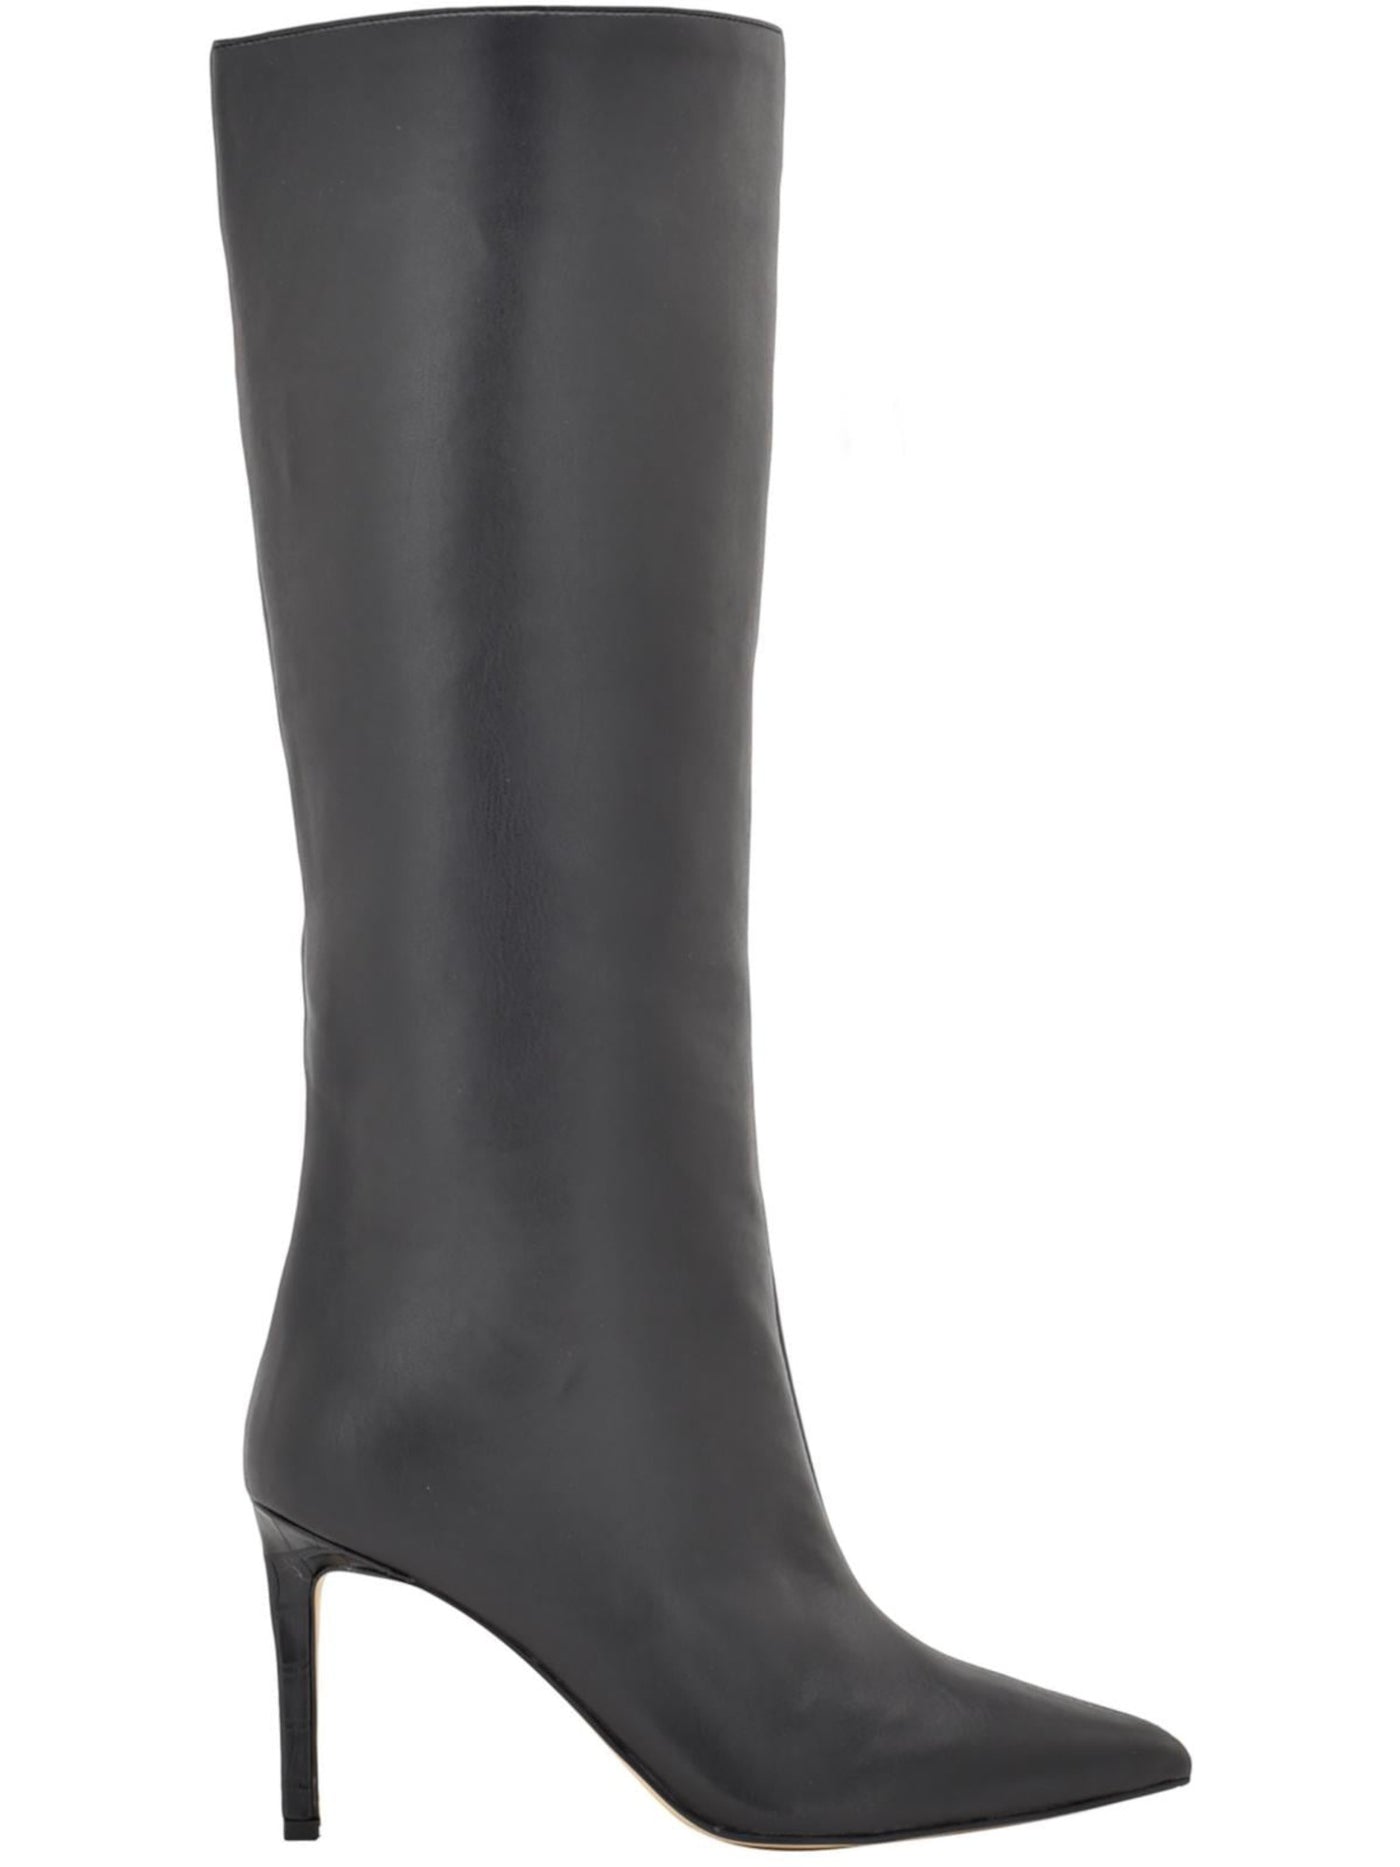 GUESS Womens Black Padded Dayton Pointy Toe Stiletto Dress Boots 10 M